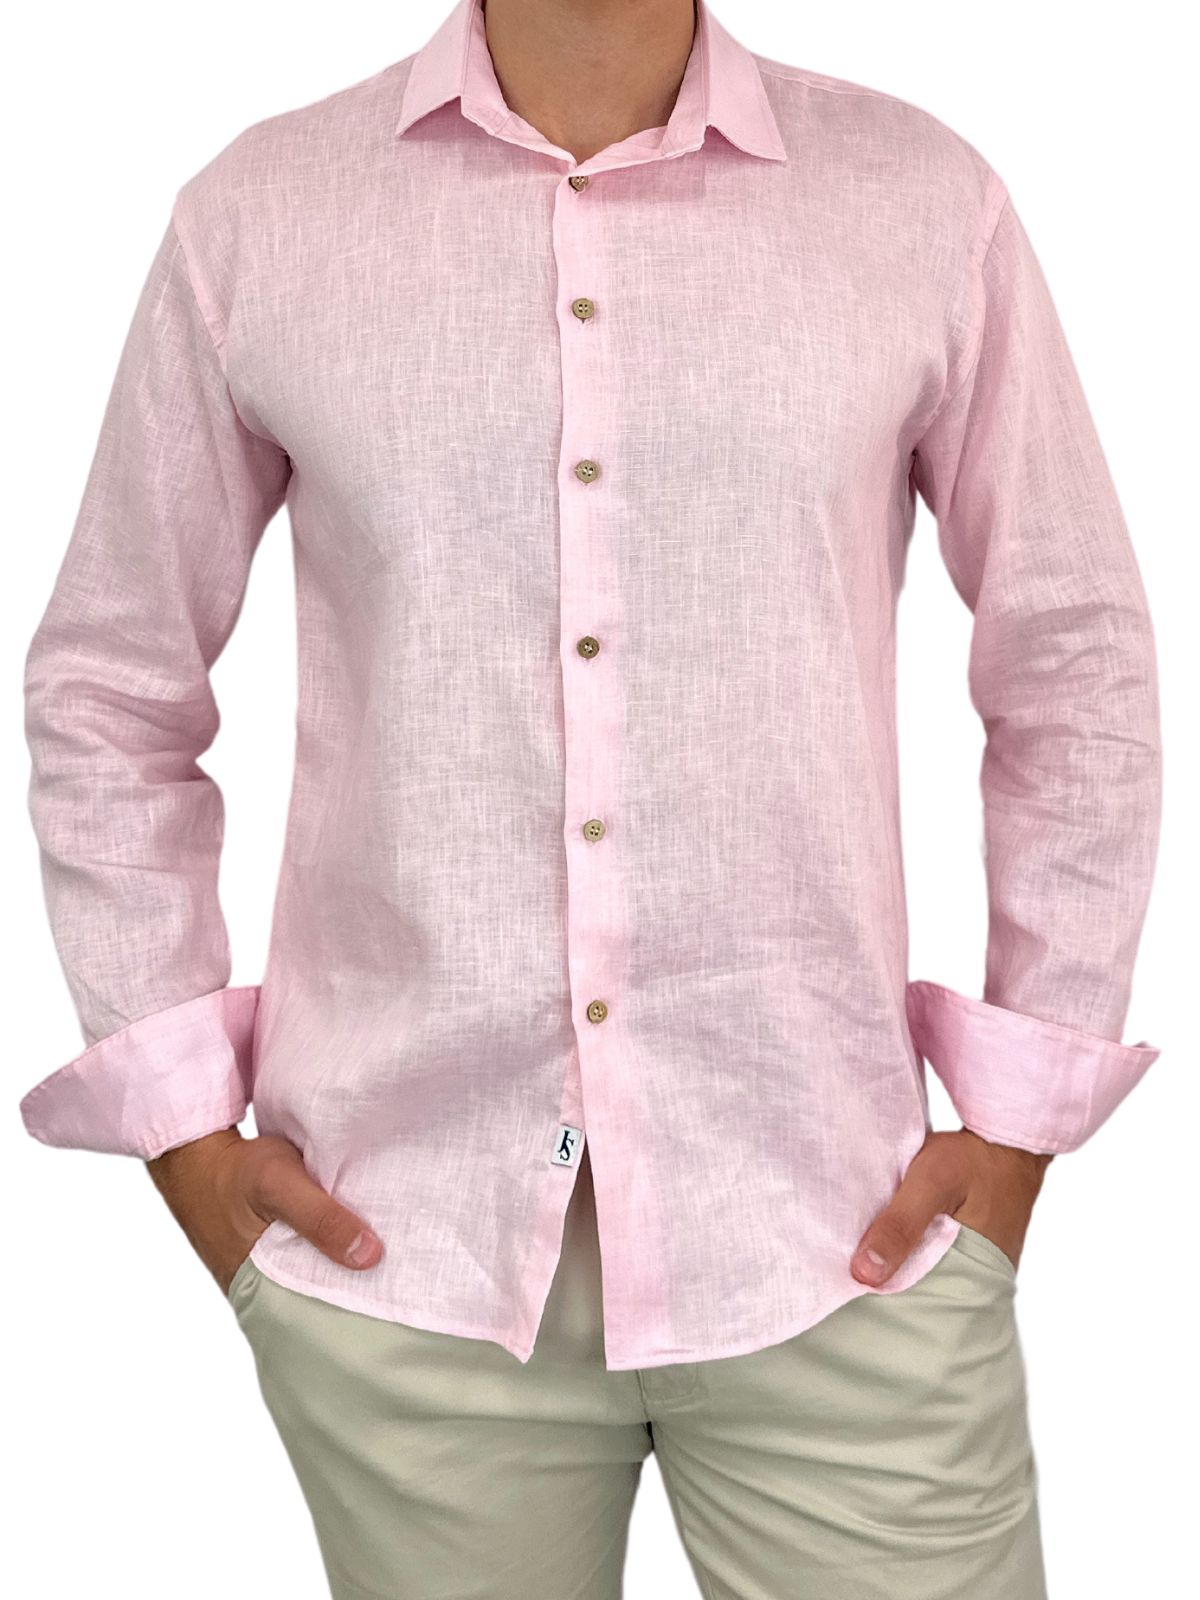 Byron Bay Linen L/S Shirt - Baby Pink